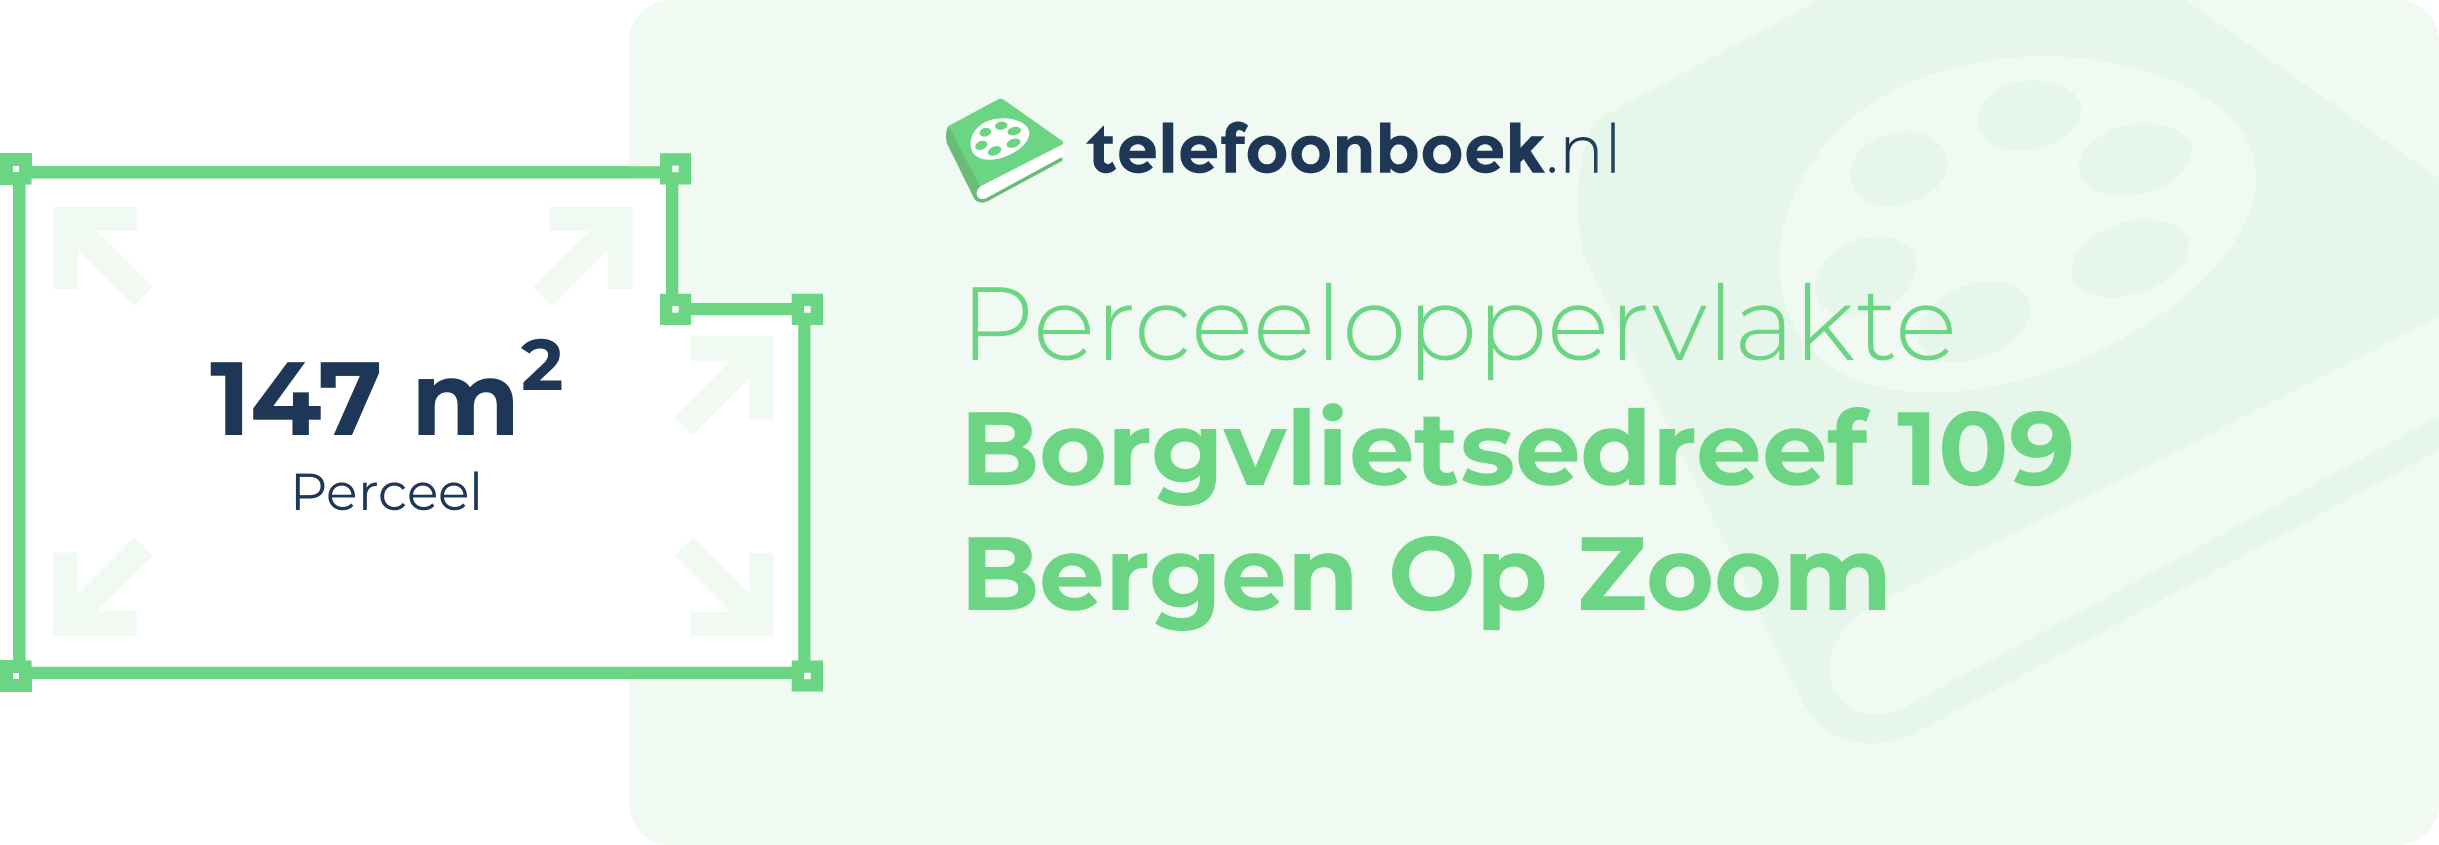 Perceeloppervlakte Borgvlietsedreef 109 Bergen Op Zoom